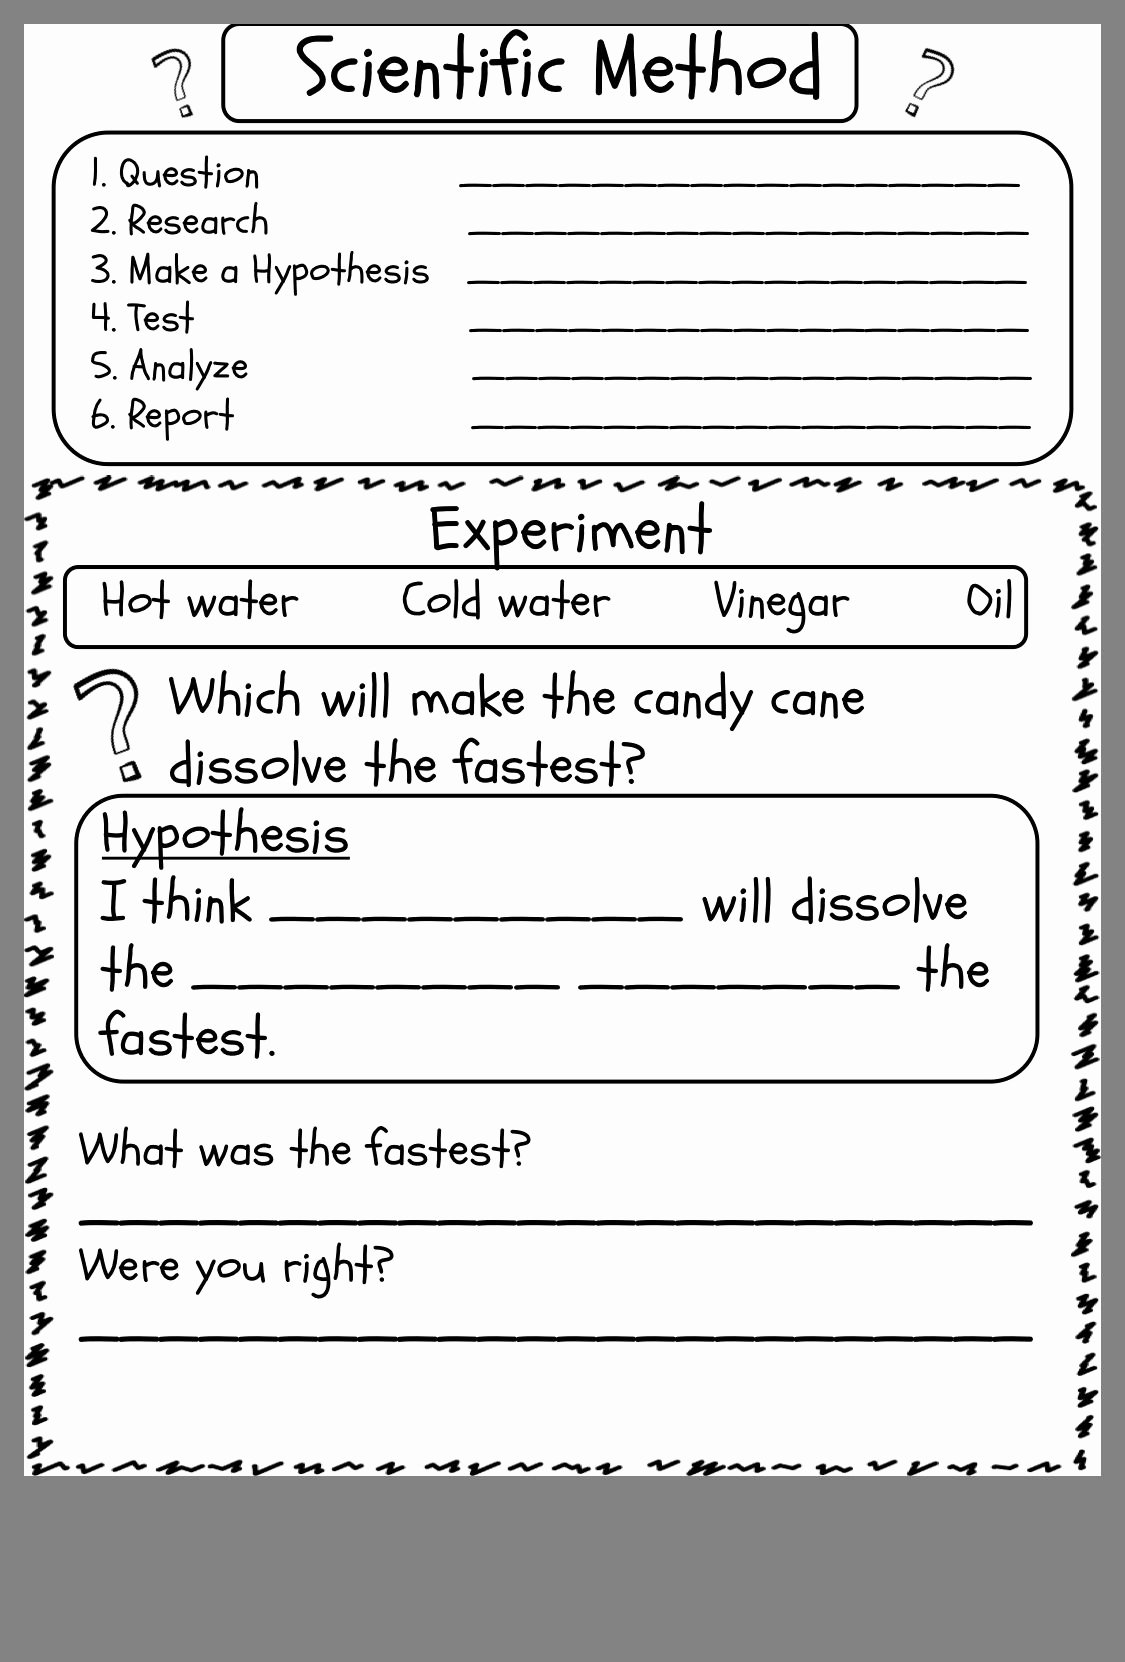 Science Worksheet for 1st Grade Best Of Scientific Method Experiment Worksheet